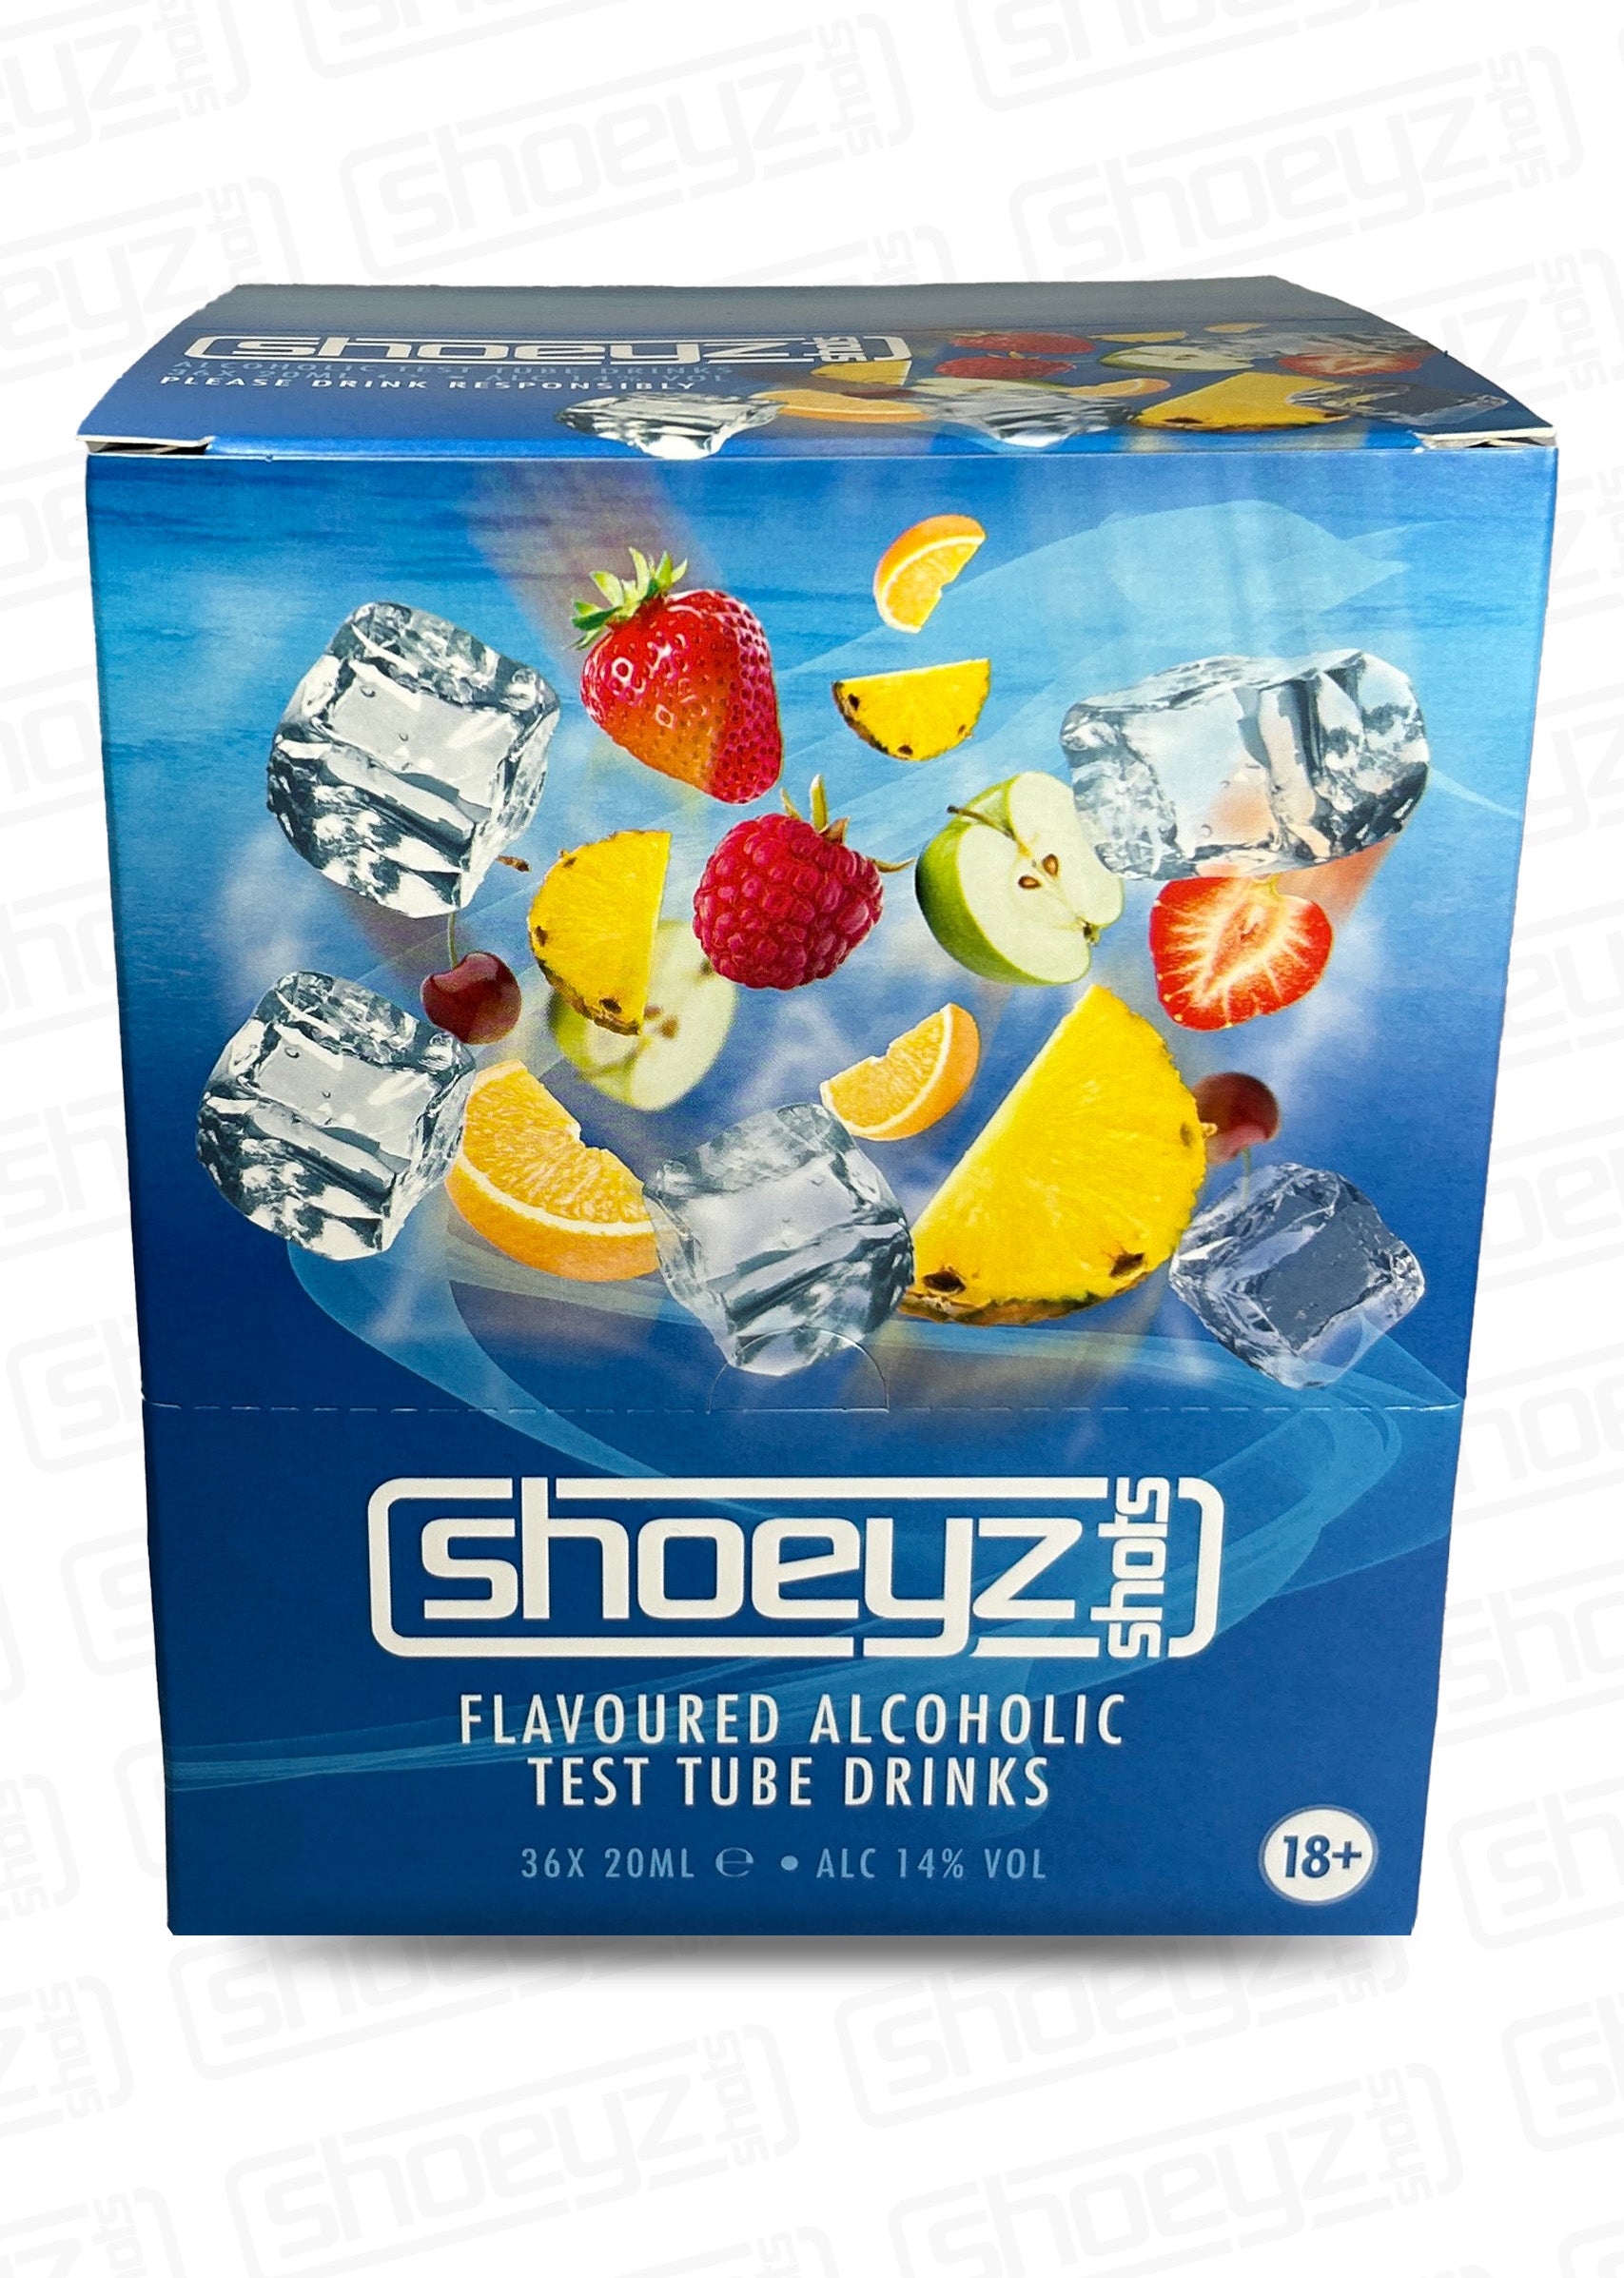 shoeyz vodka test tube shots multi flavours rear case